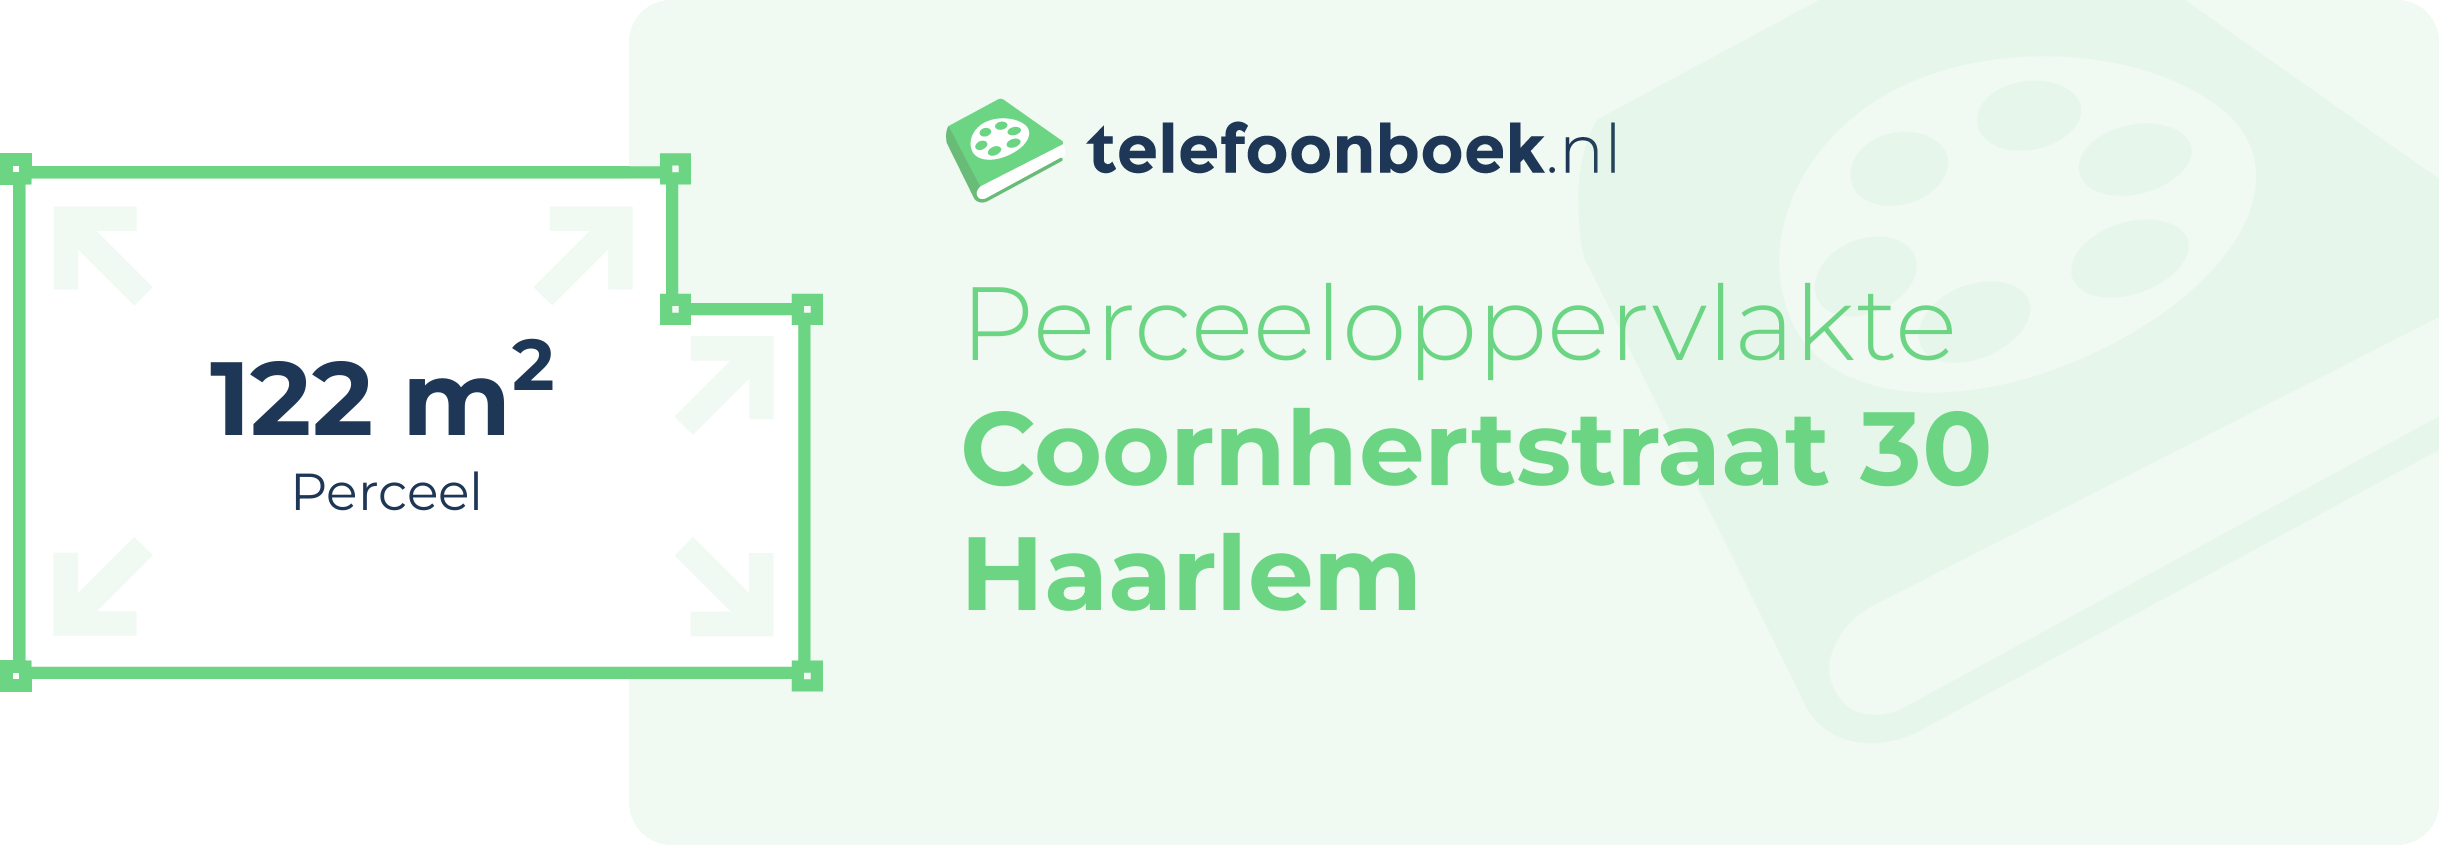 Perceeloppervlakte Coornhertstraat 30 Haarlem